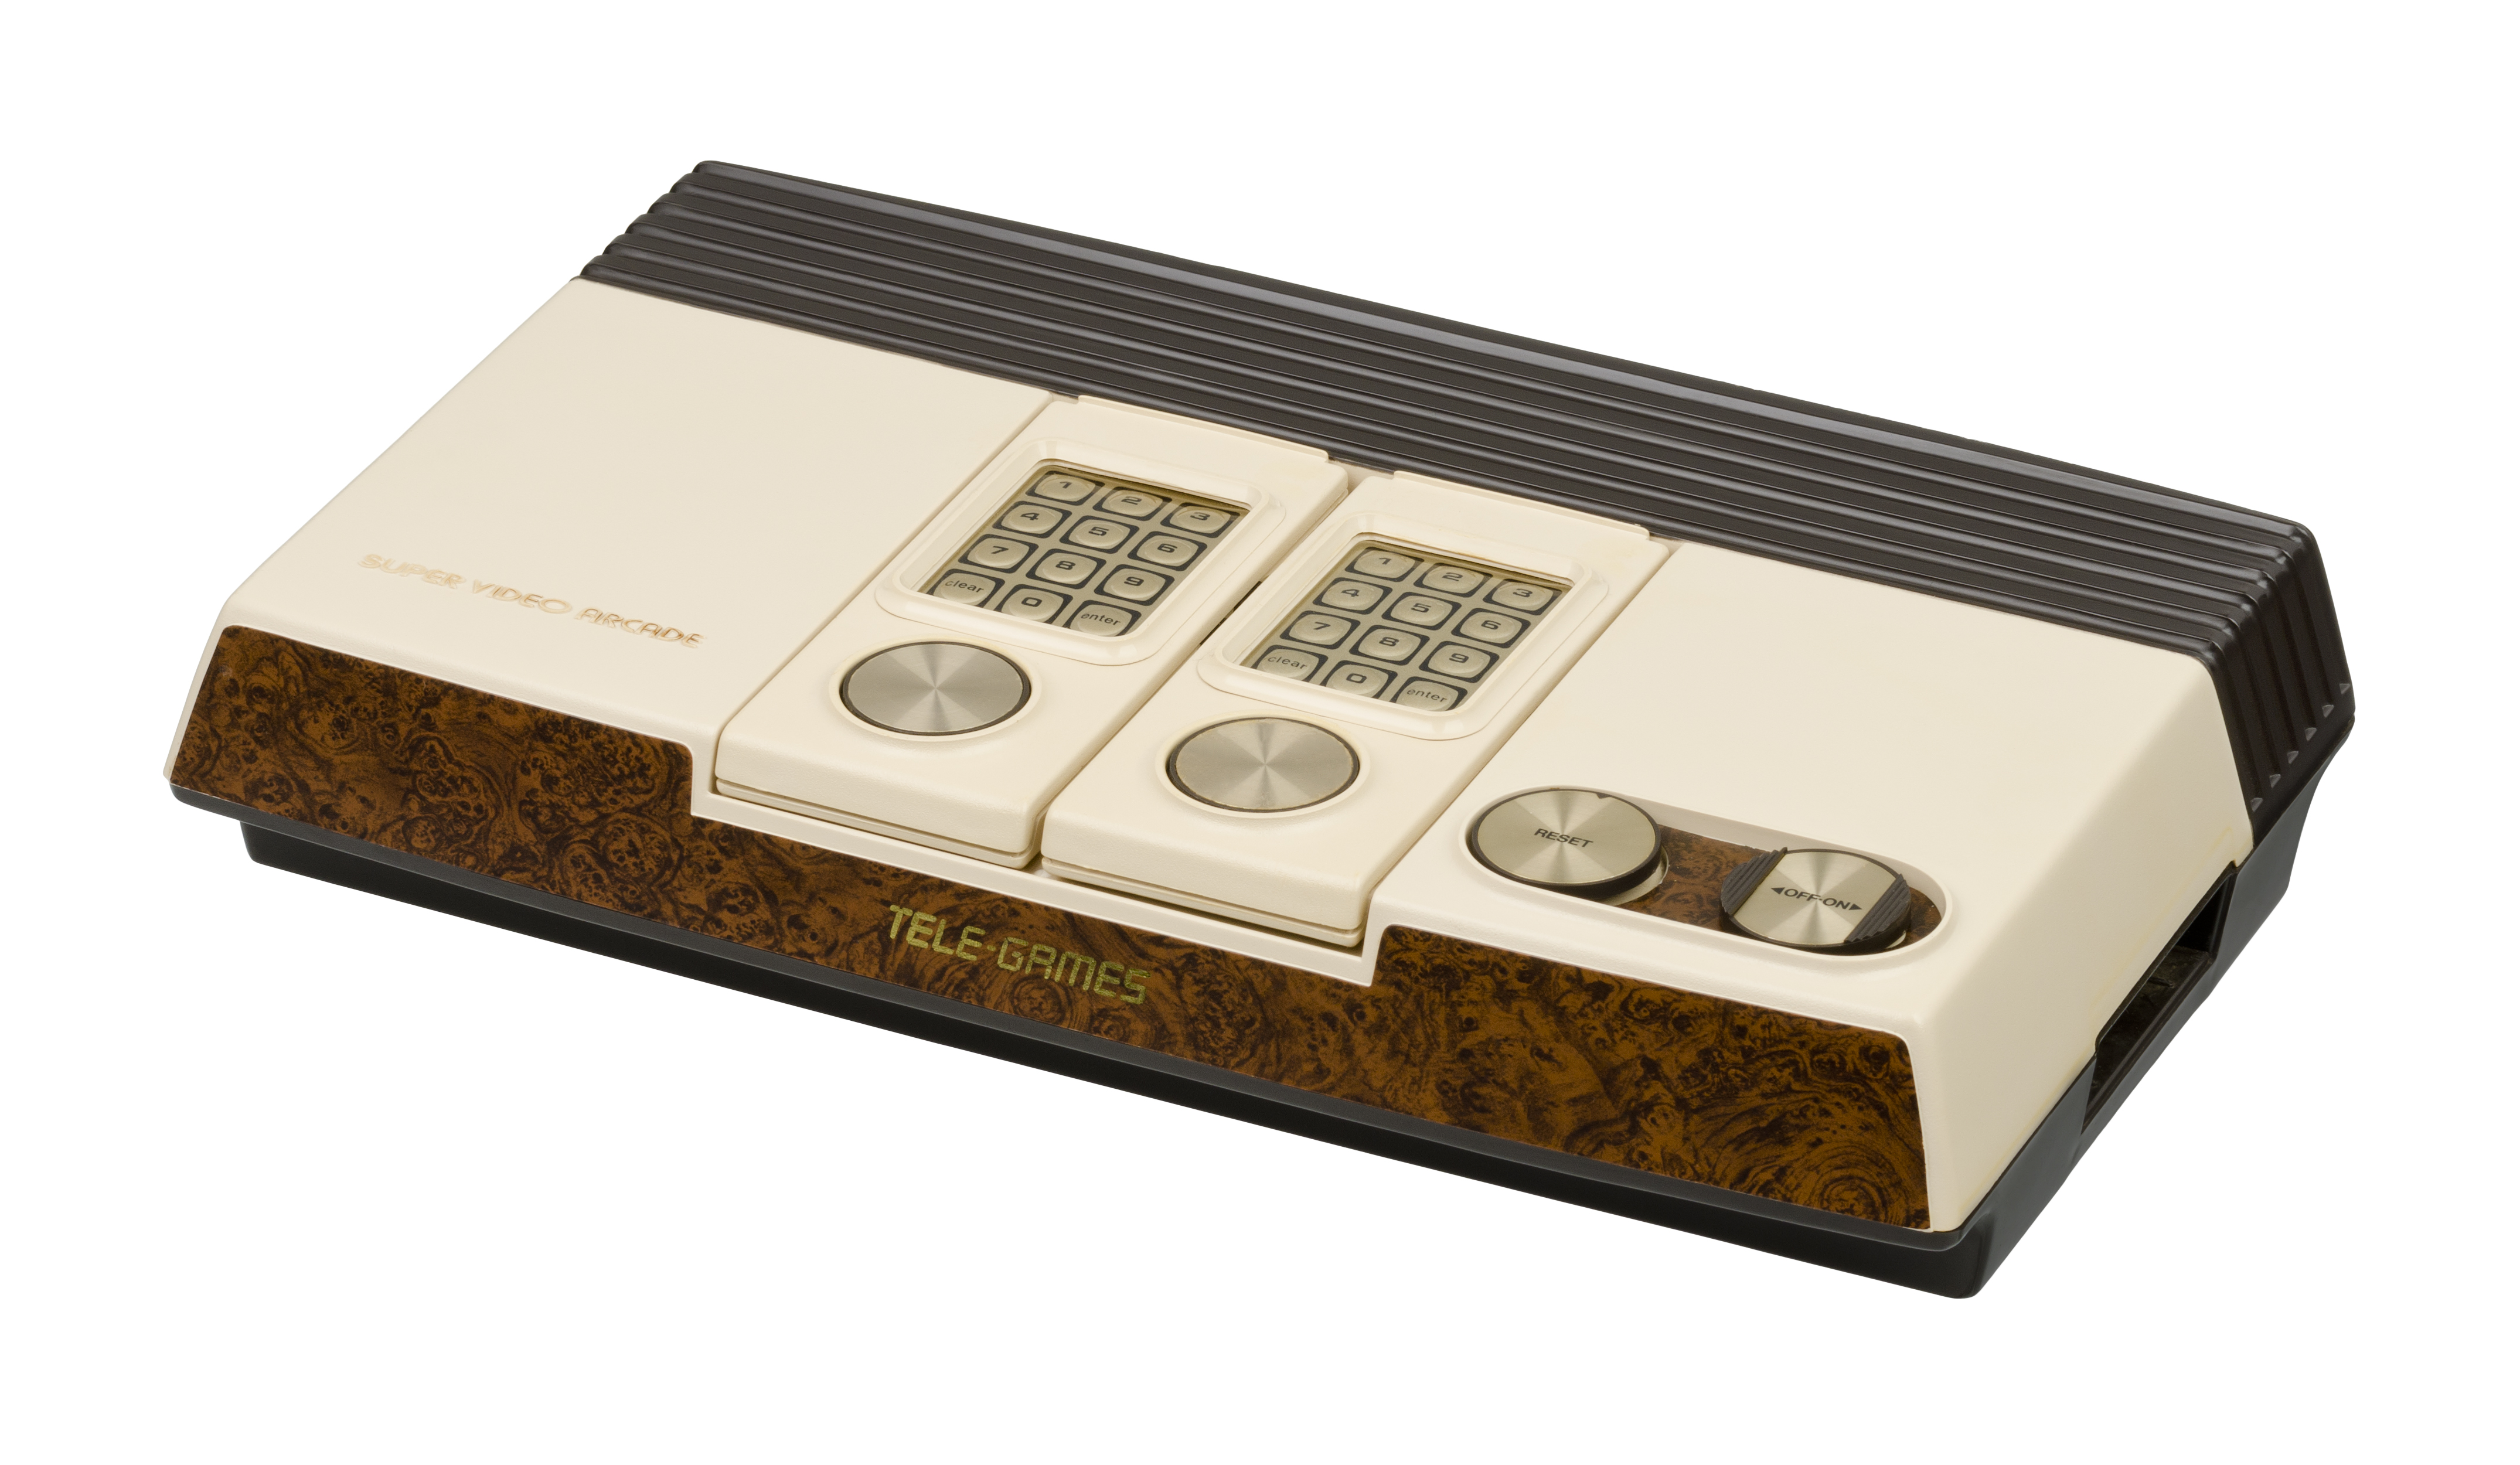 Sears-Tele-Games-Super-Video-Arcade-Intellivision-Console-FL.jpg